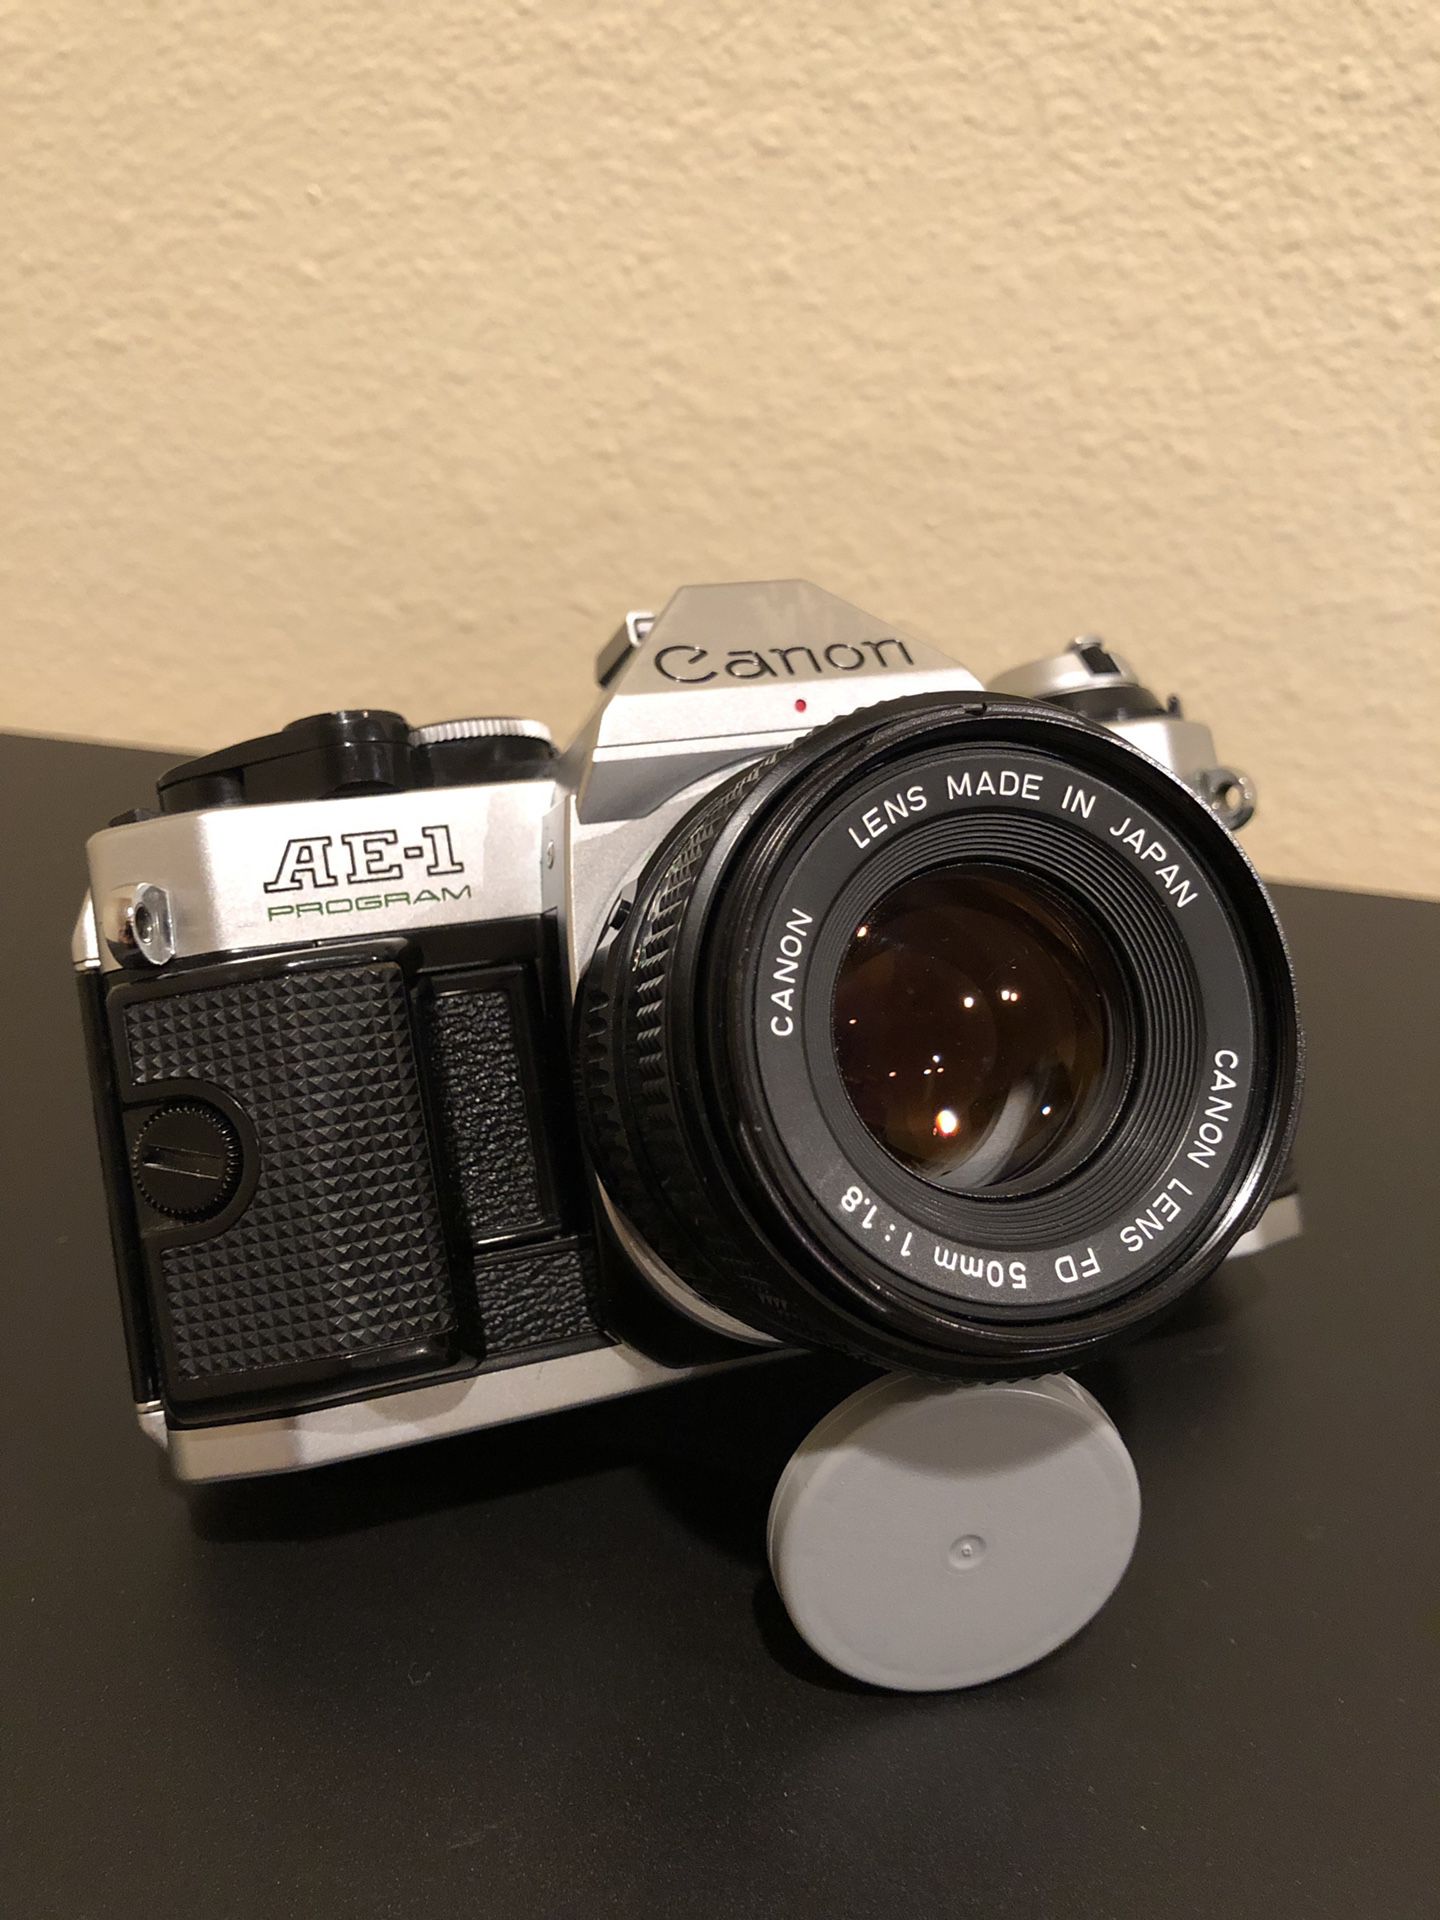 Canon AE-1 Program 35mm SLR Vintage Analog Film Camera